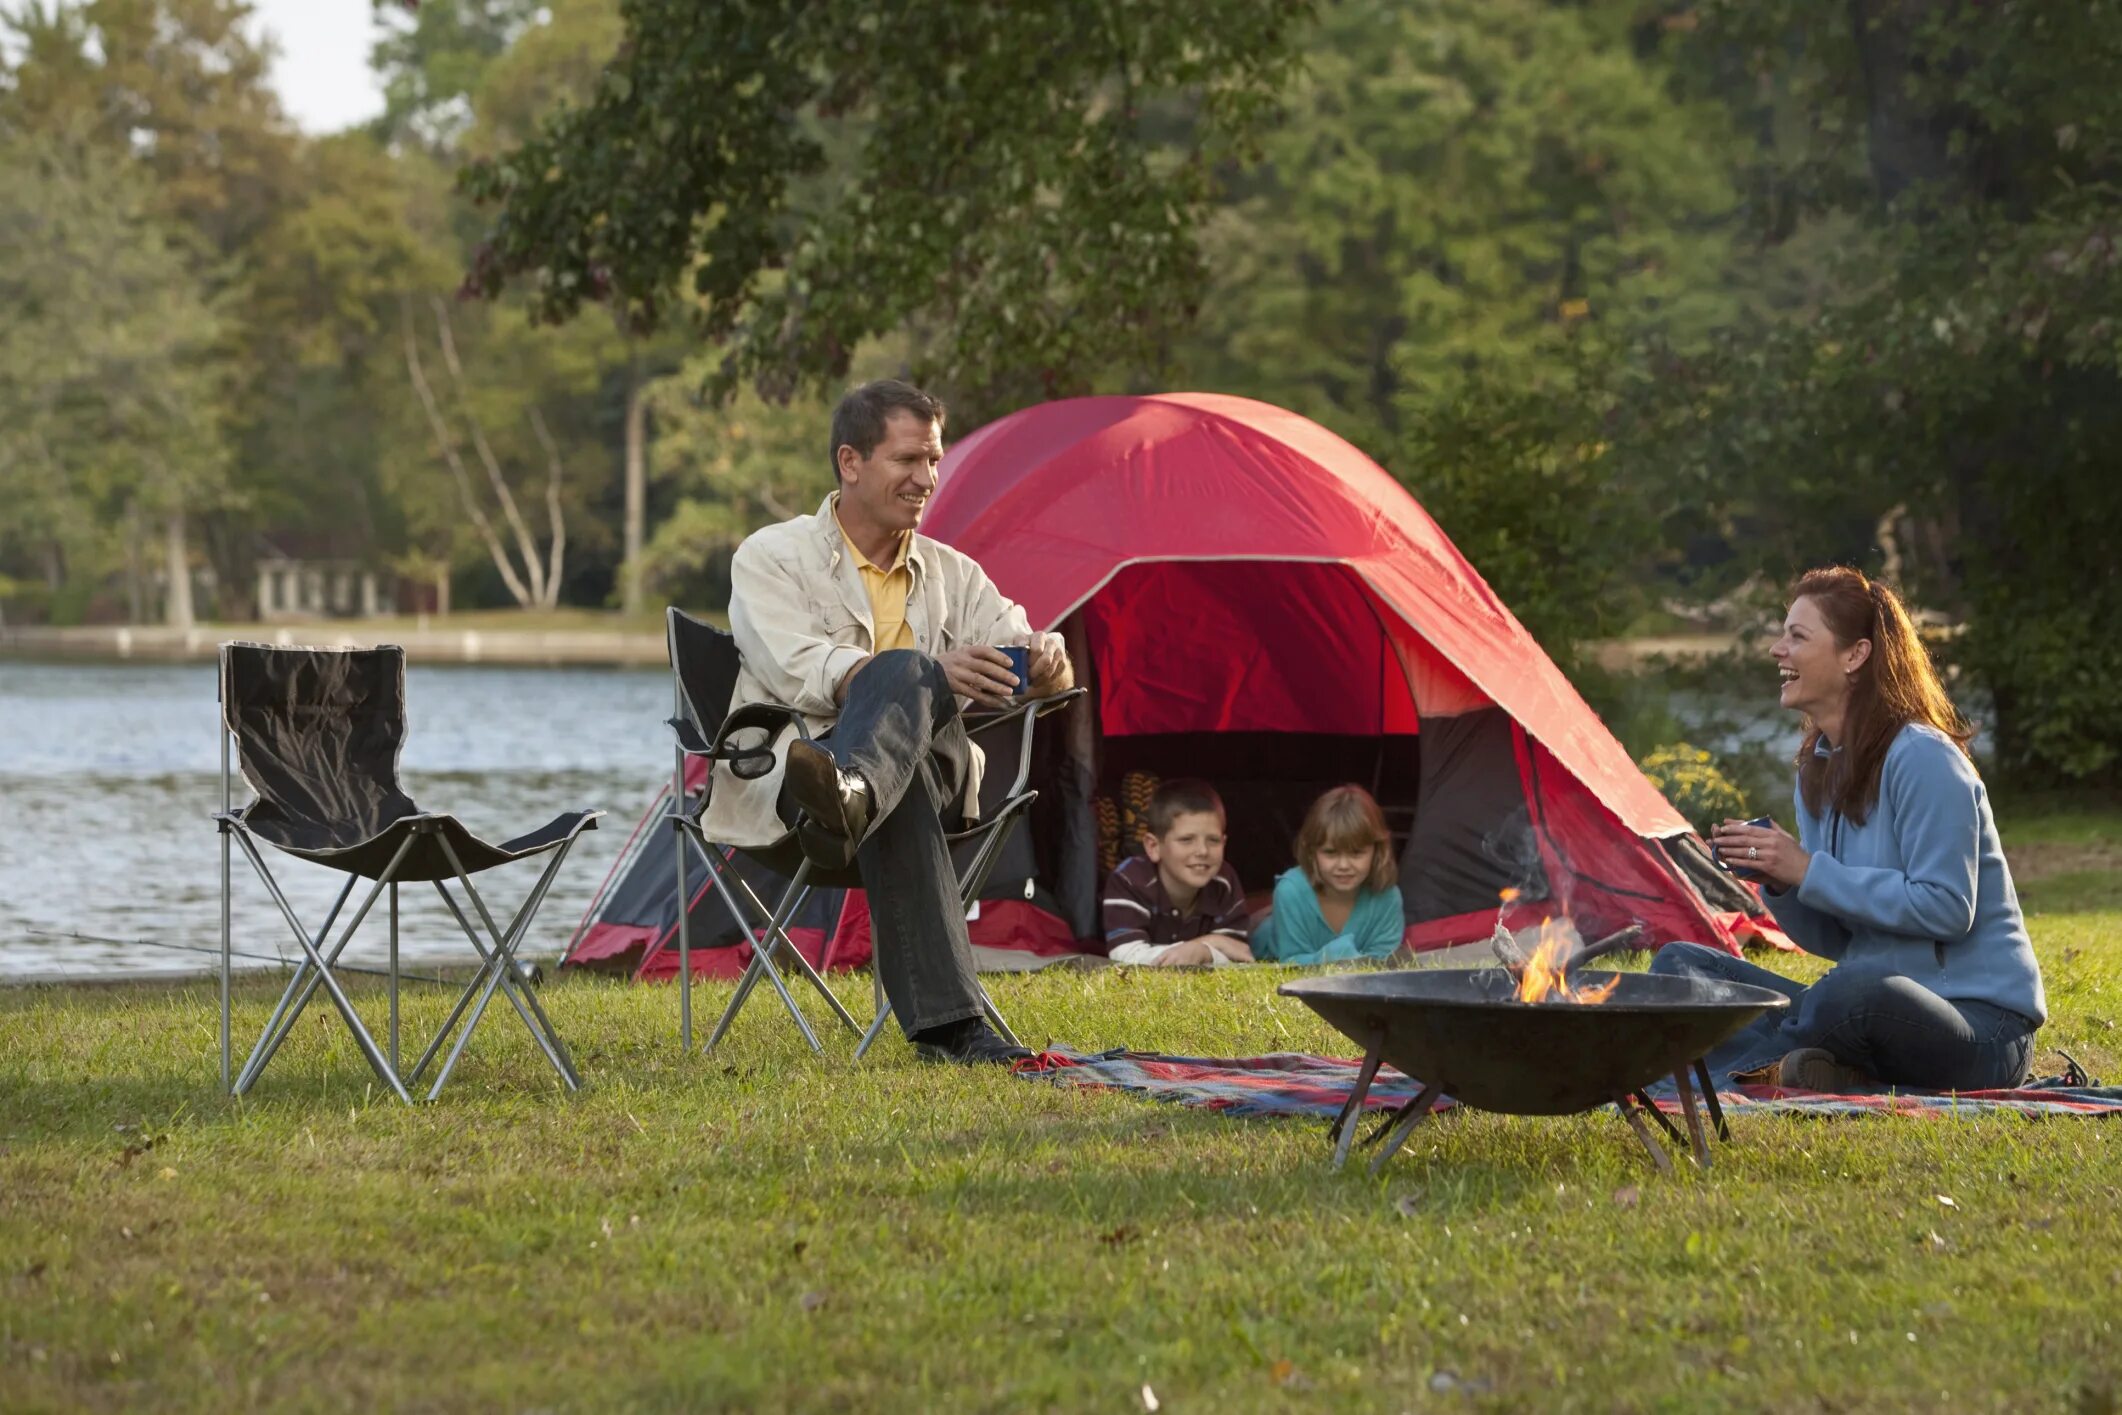 Camping music. Палатка на природе. Отдыхаем на природе. Пикник с семьей на природе. Пикник на природе с палатками.